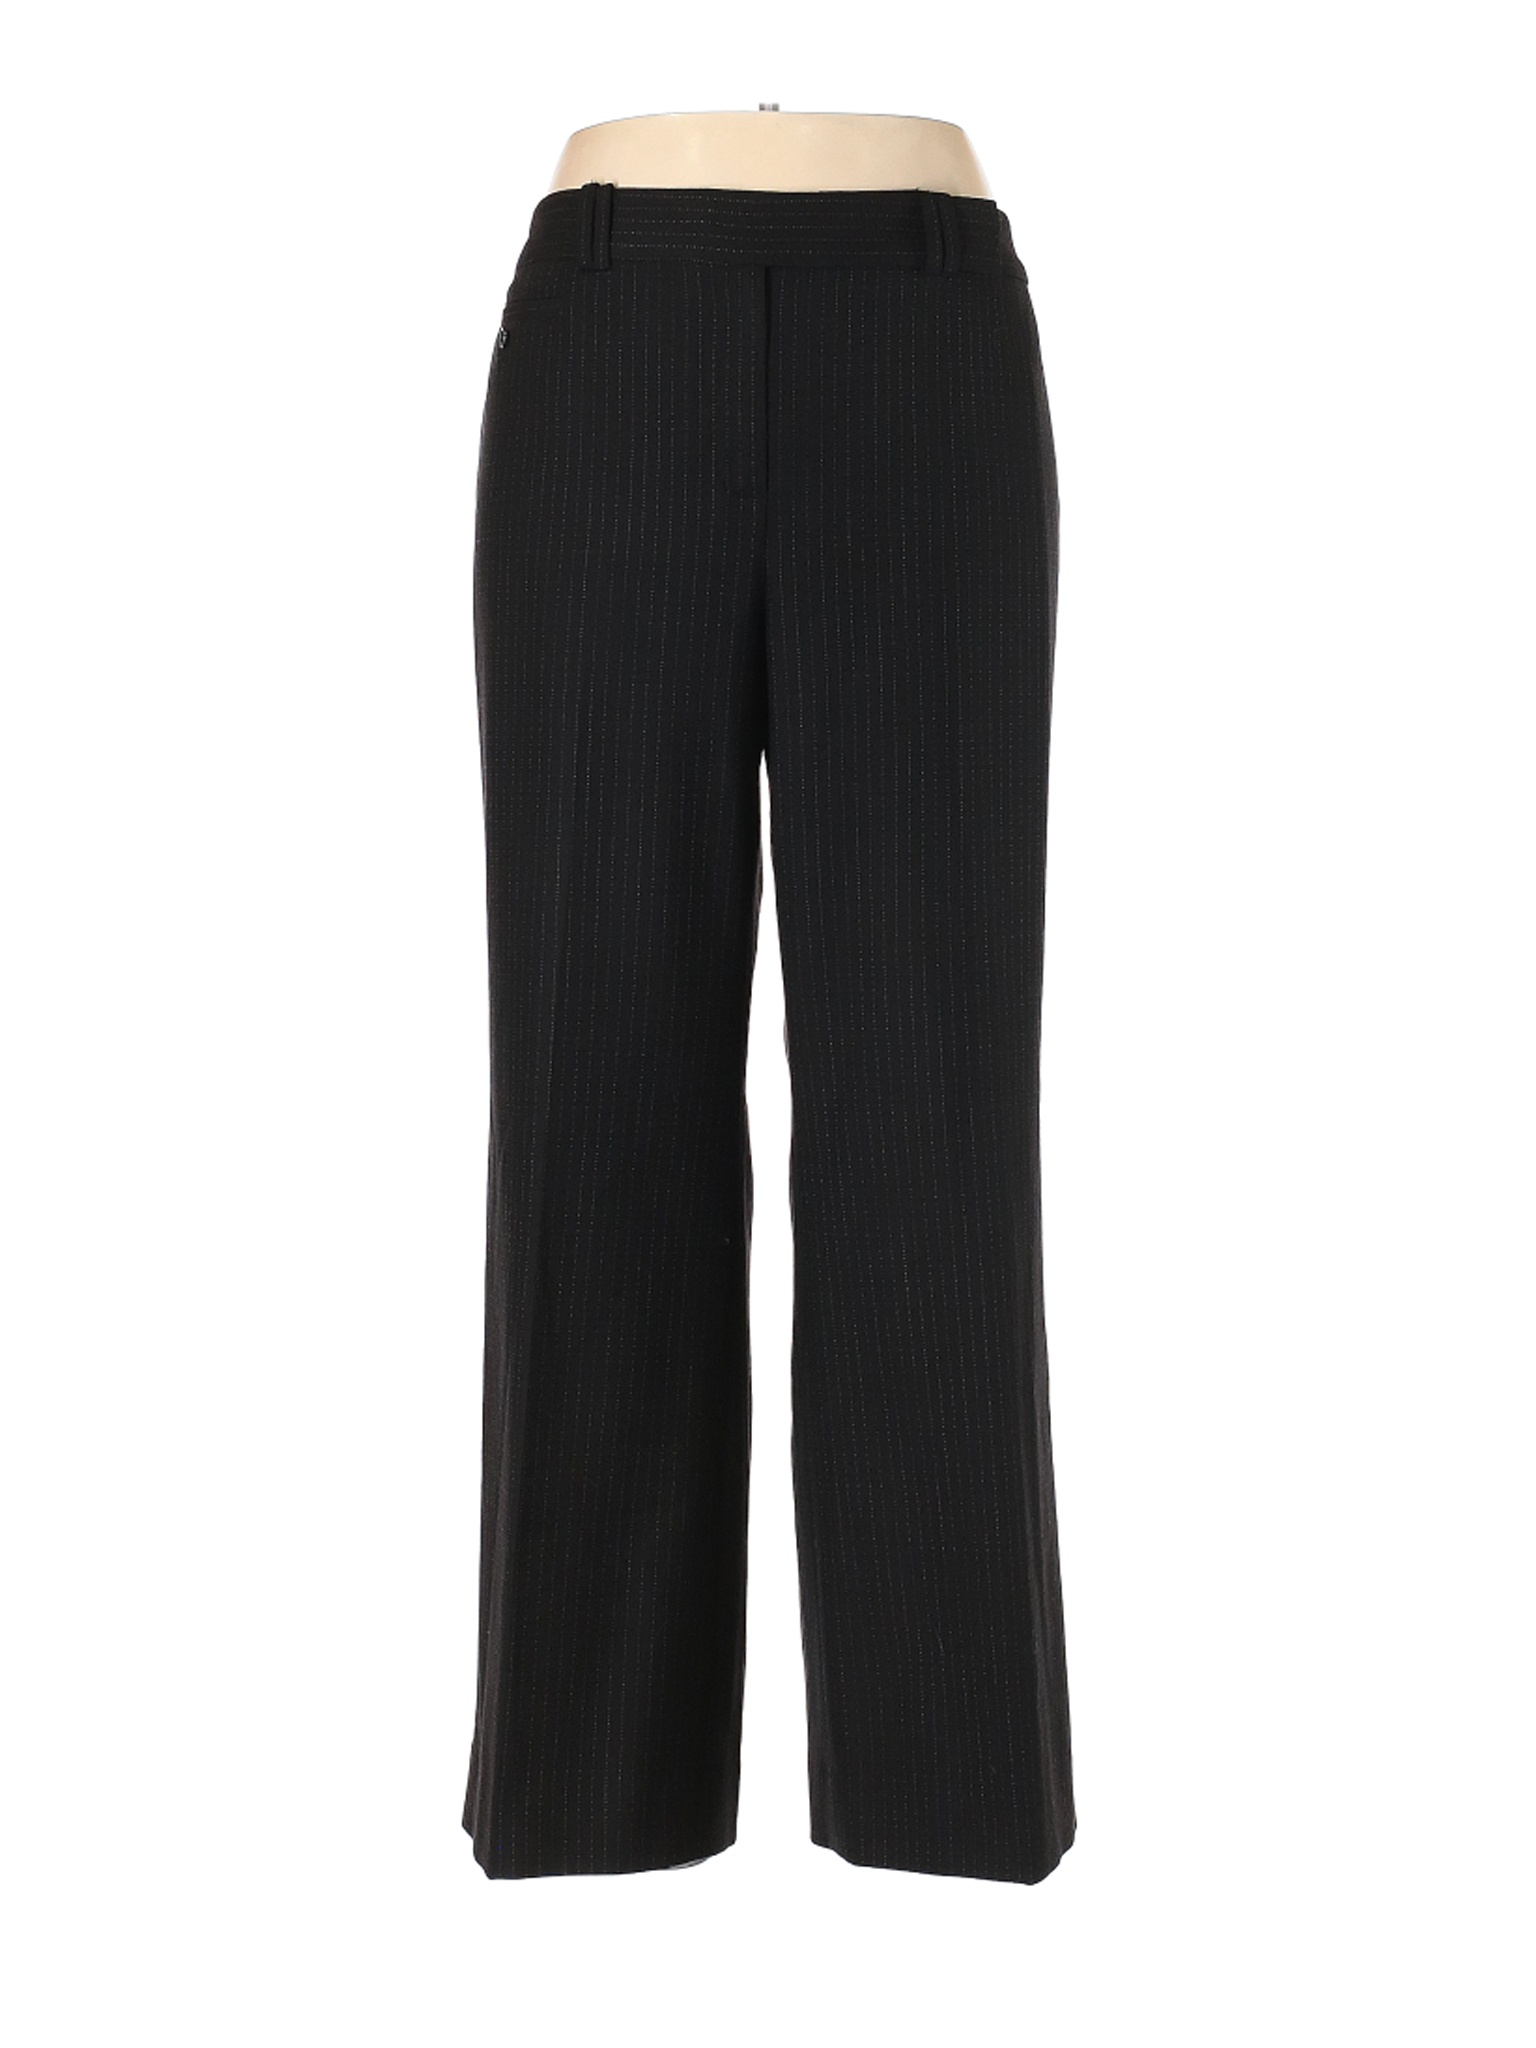 Ann Taylor Stripes Black Wool Pants Size 14 - 20% off | thredUP